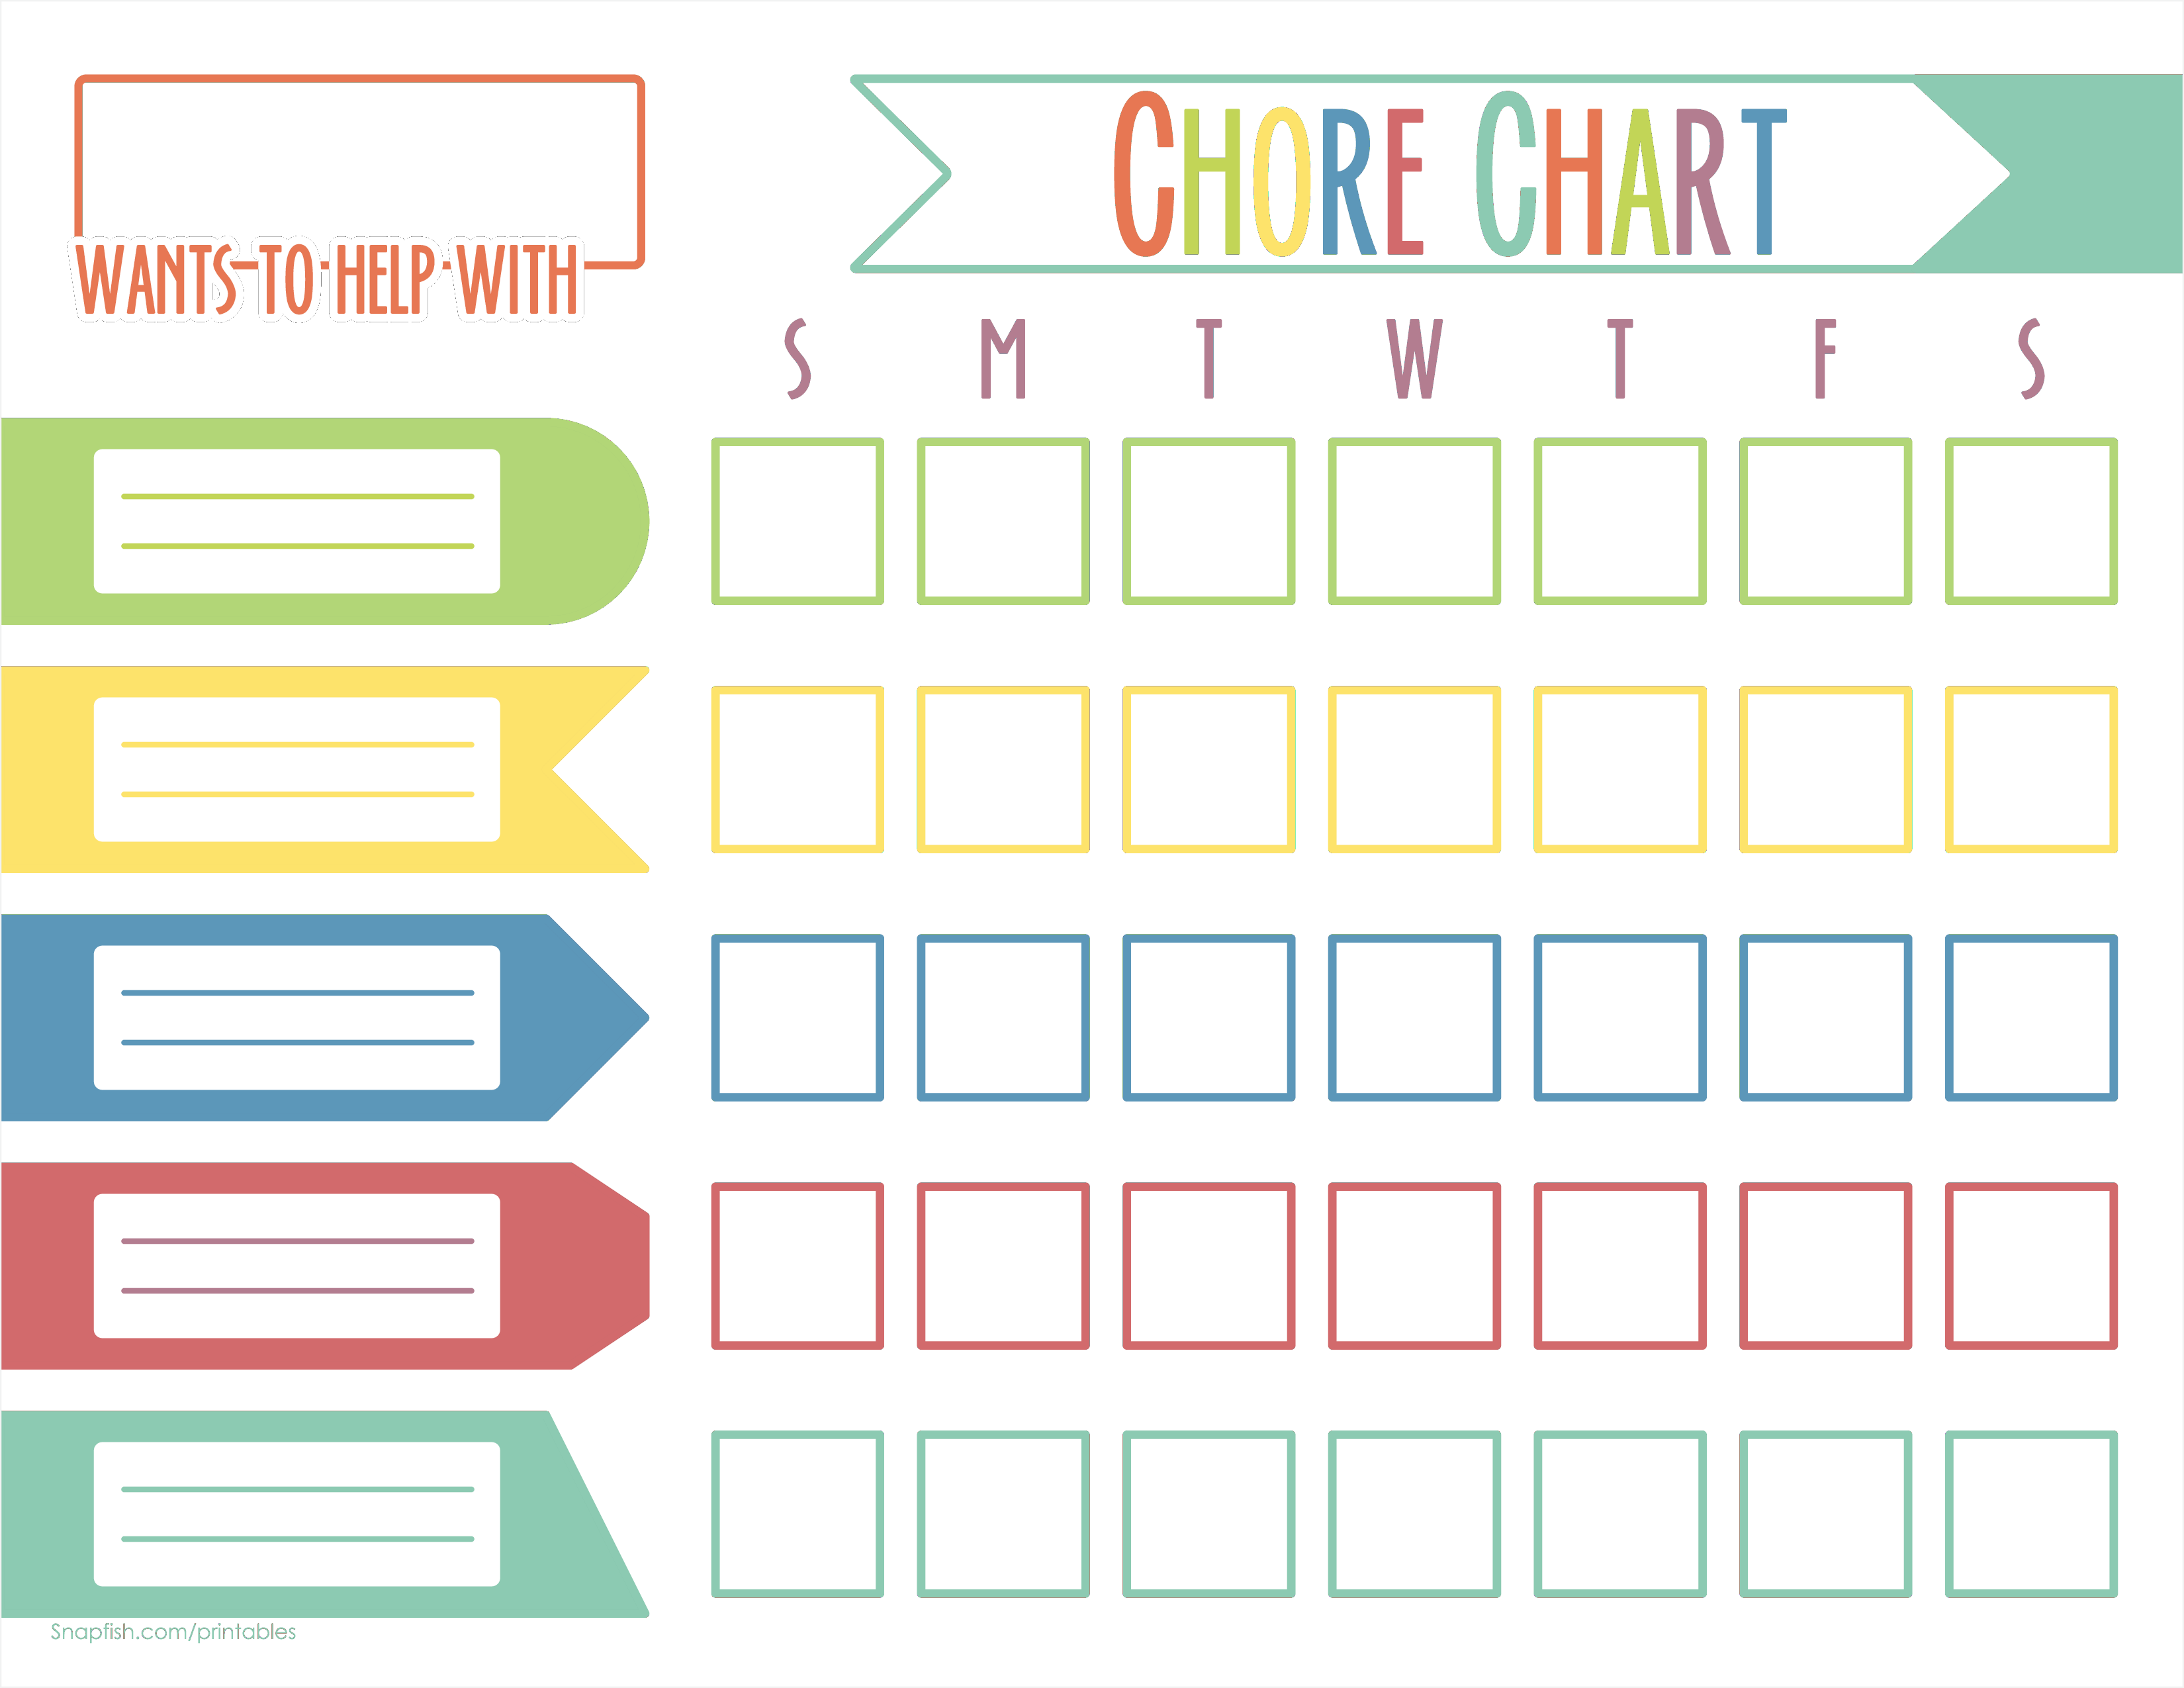 Chore Chart For Kids main image